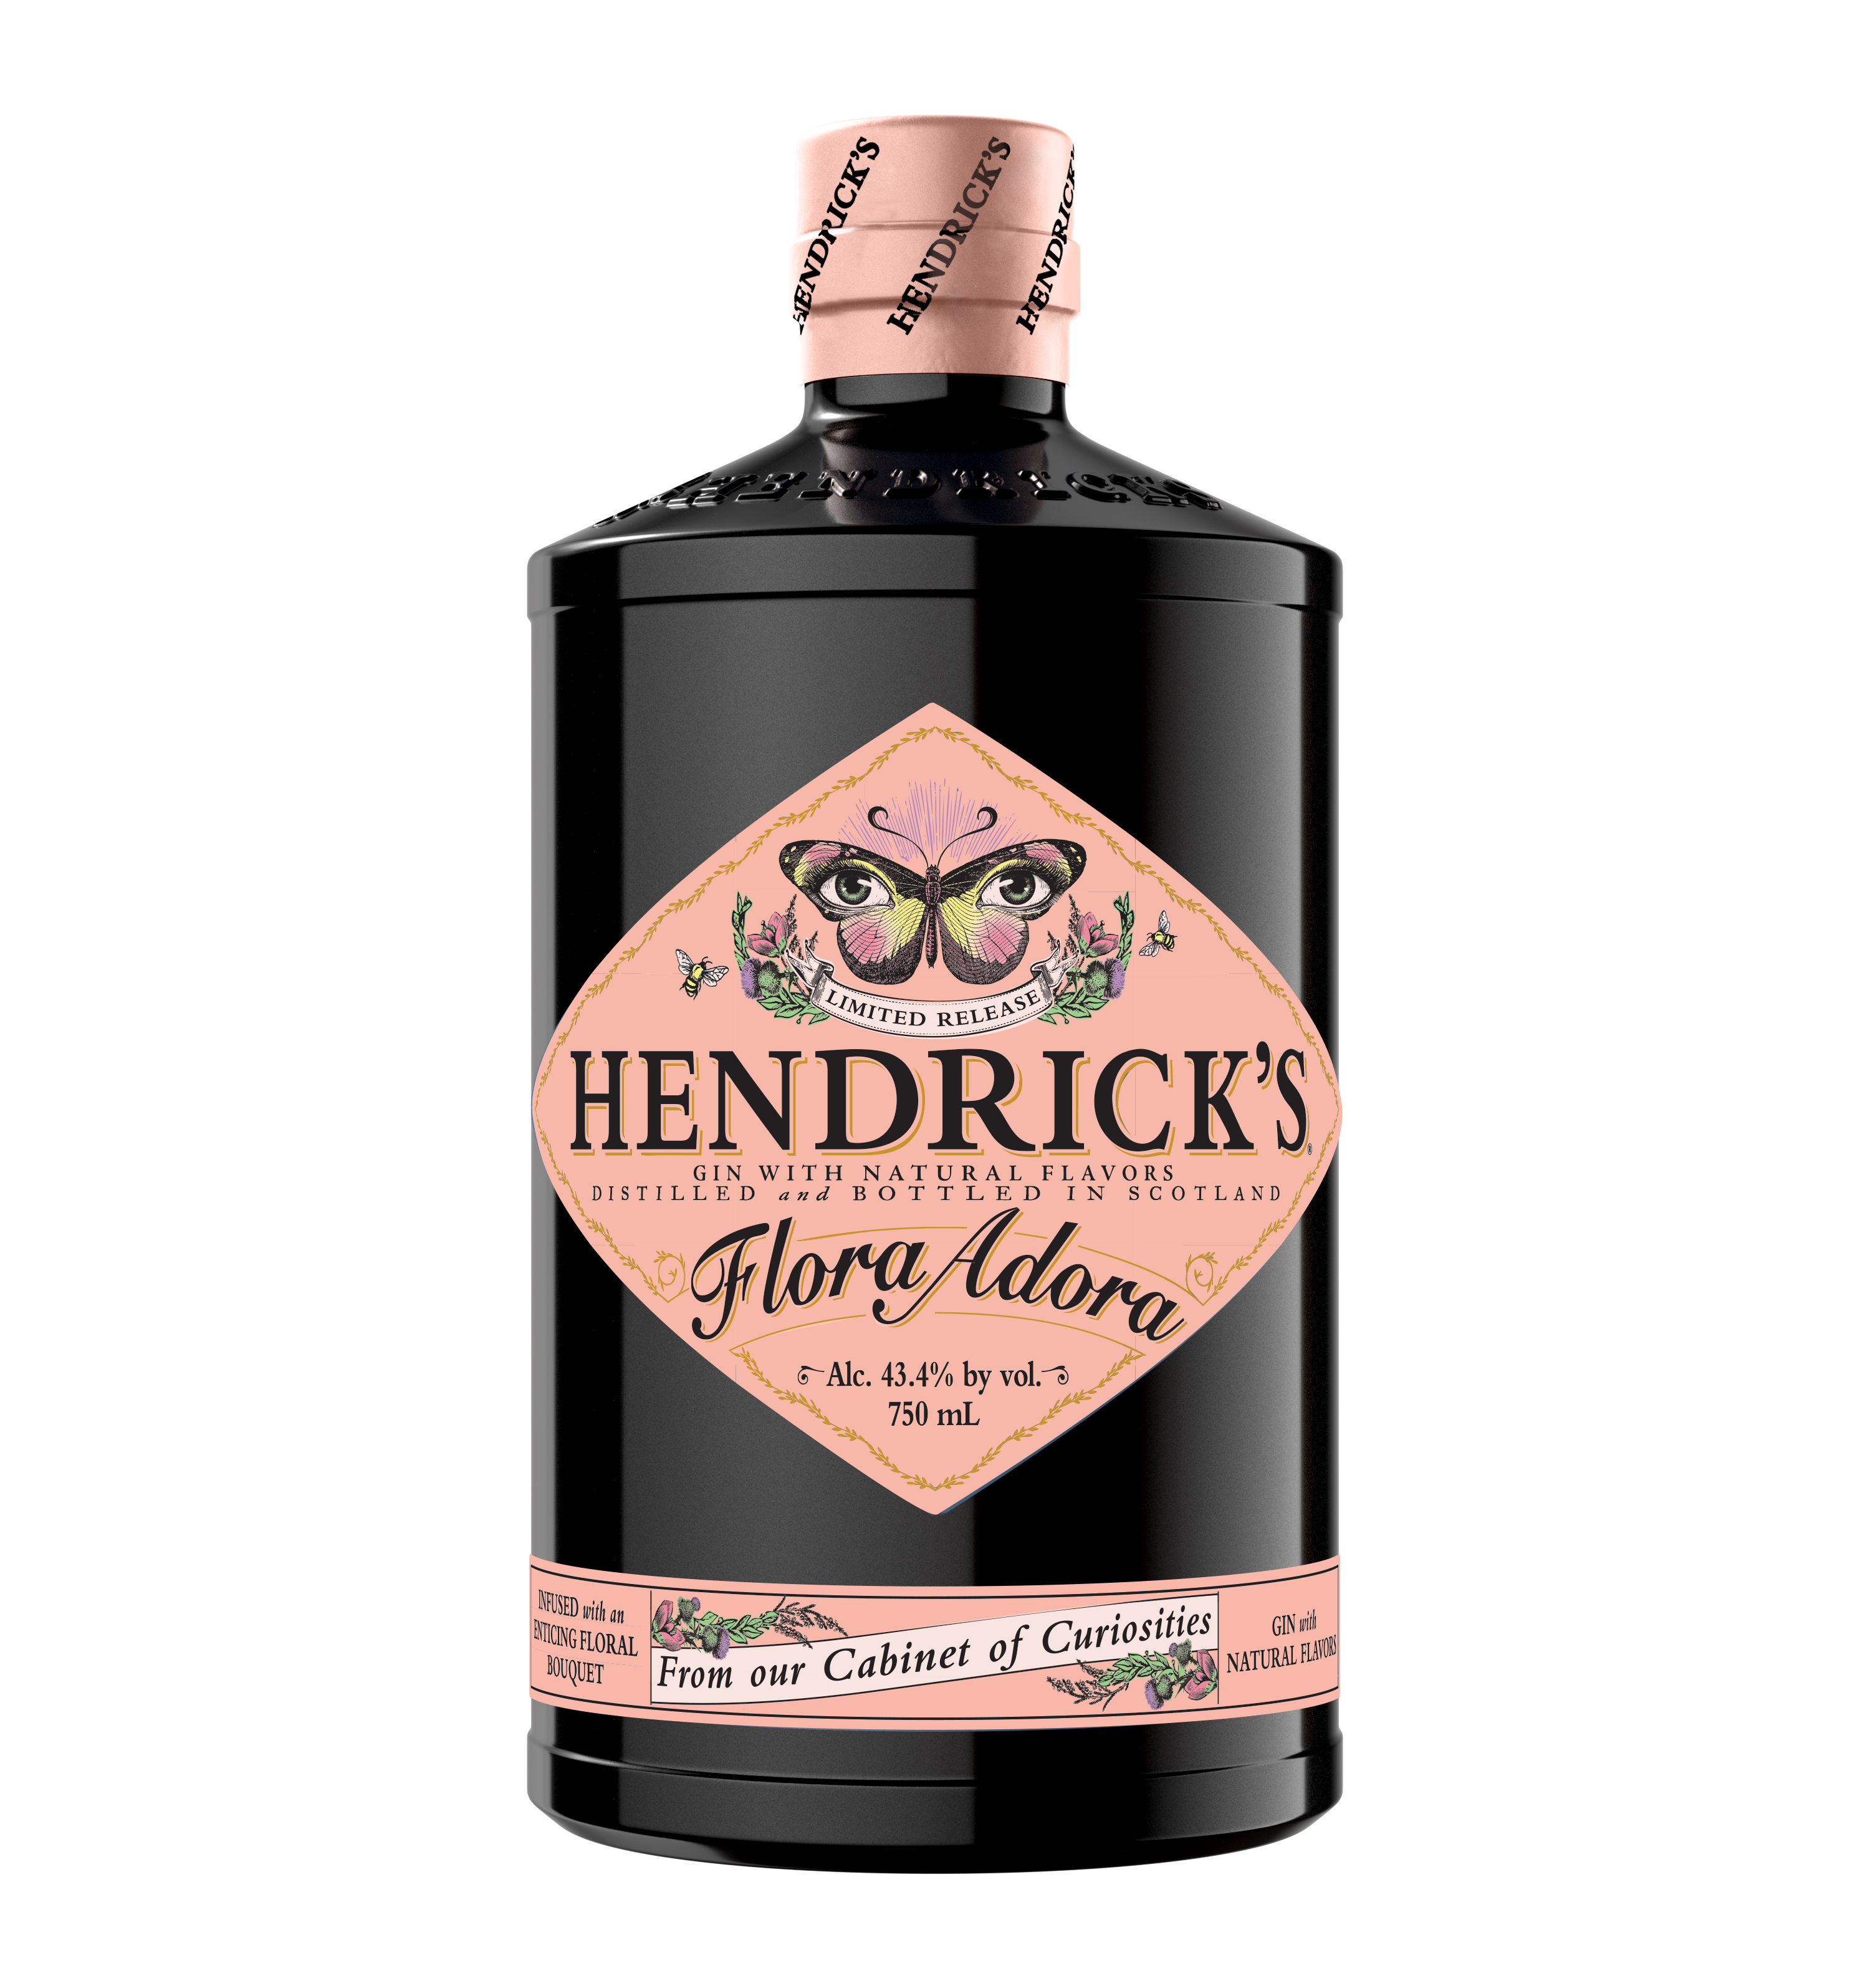 Hendrick's Flora Adora Gin Gin